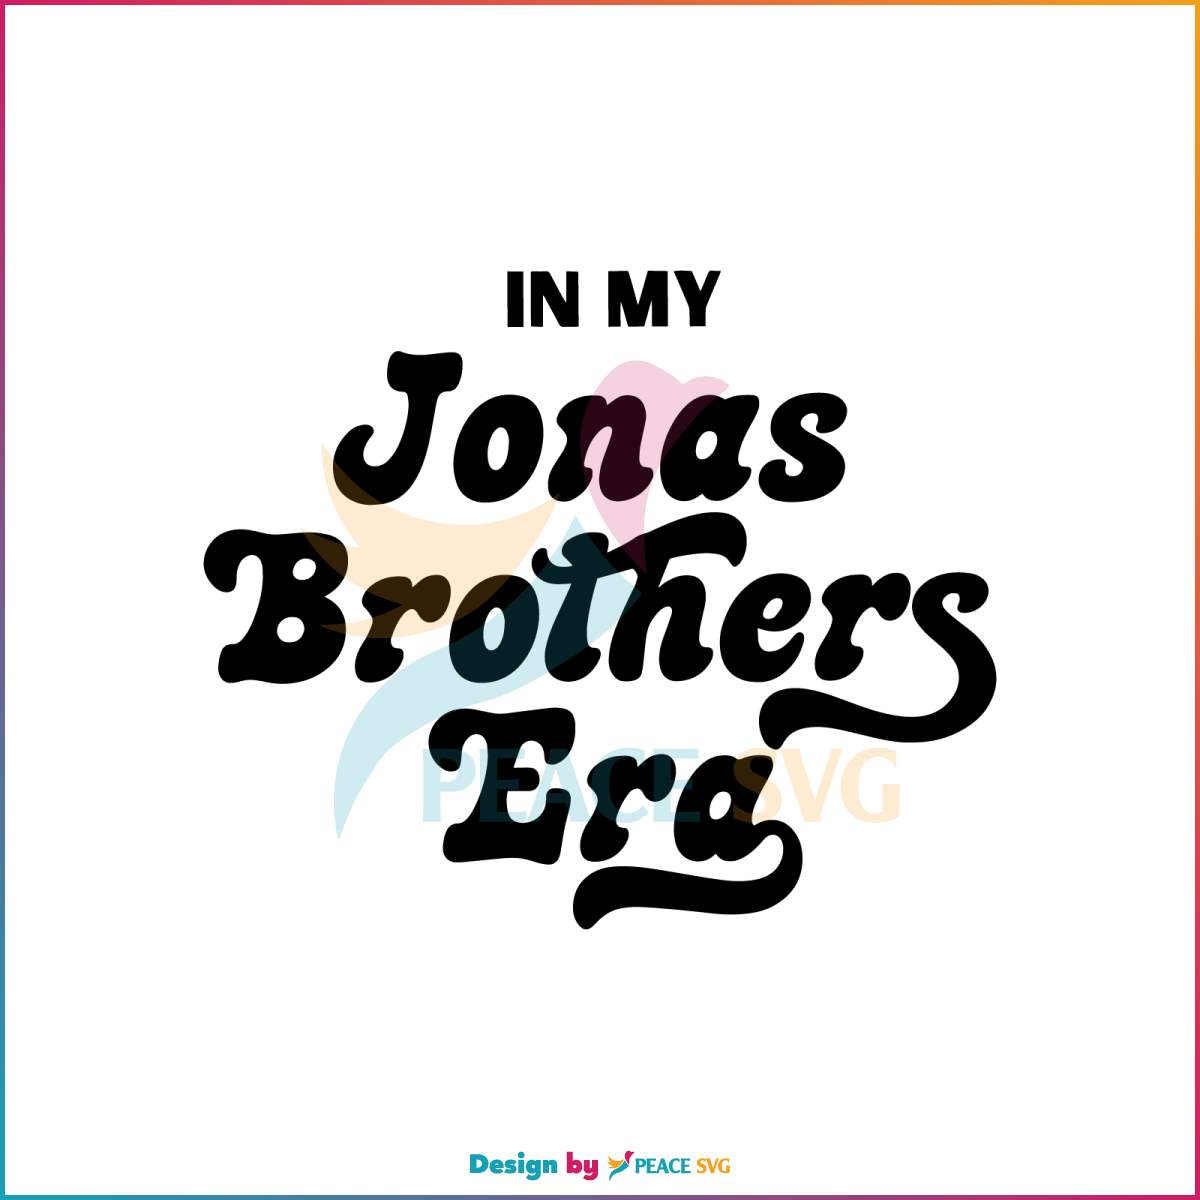 jonas-brothers-era-retro-the-album-tour-svg-cutting-file